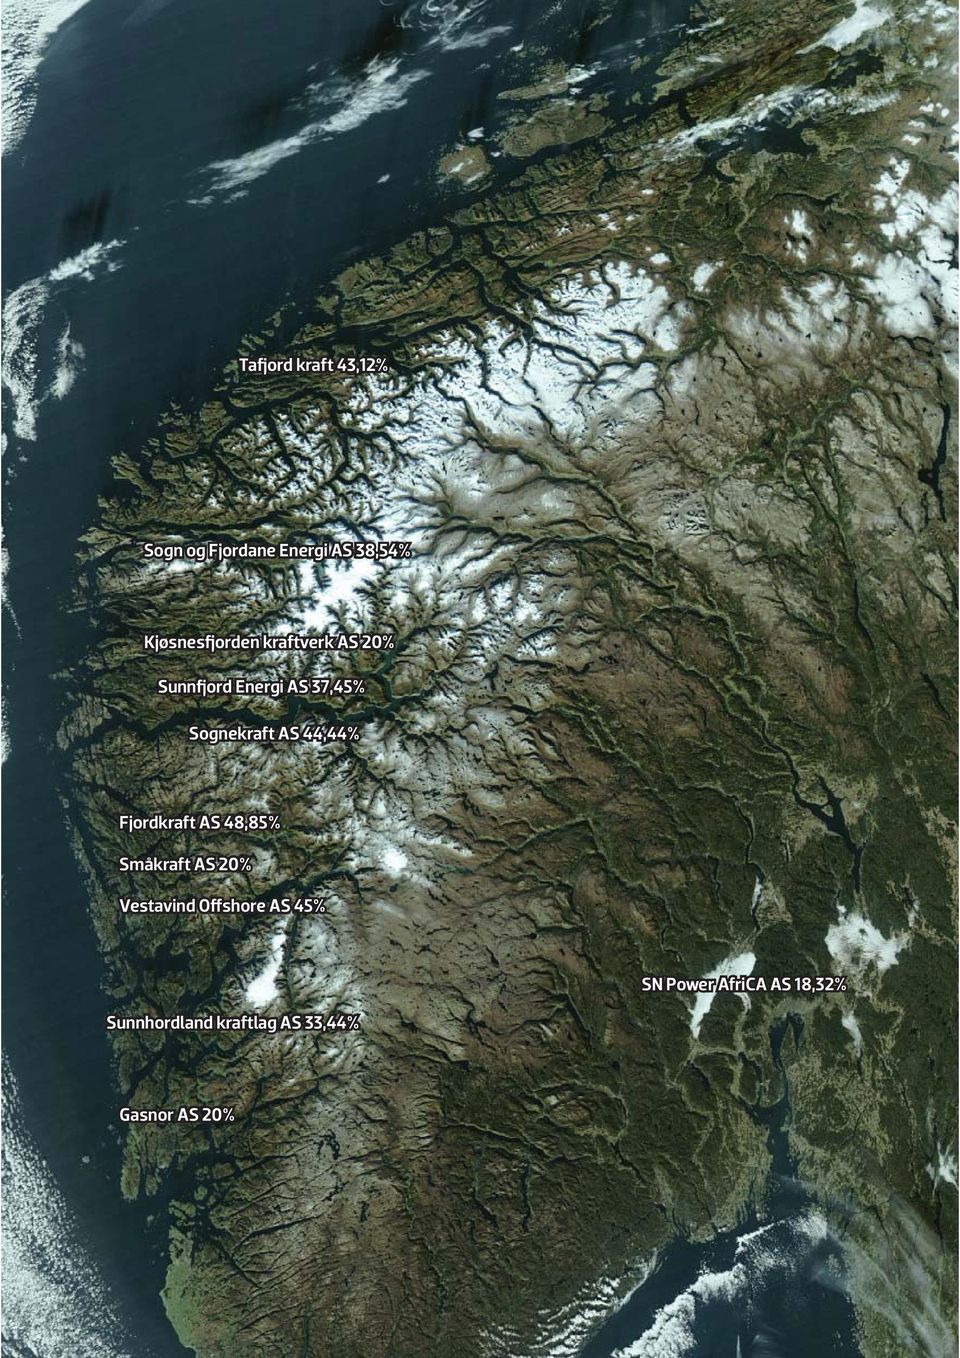 Sognekraft AS 44,44% Fjordkraft AS 48,85% Småkraft AS 20% Vestavind